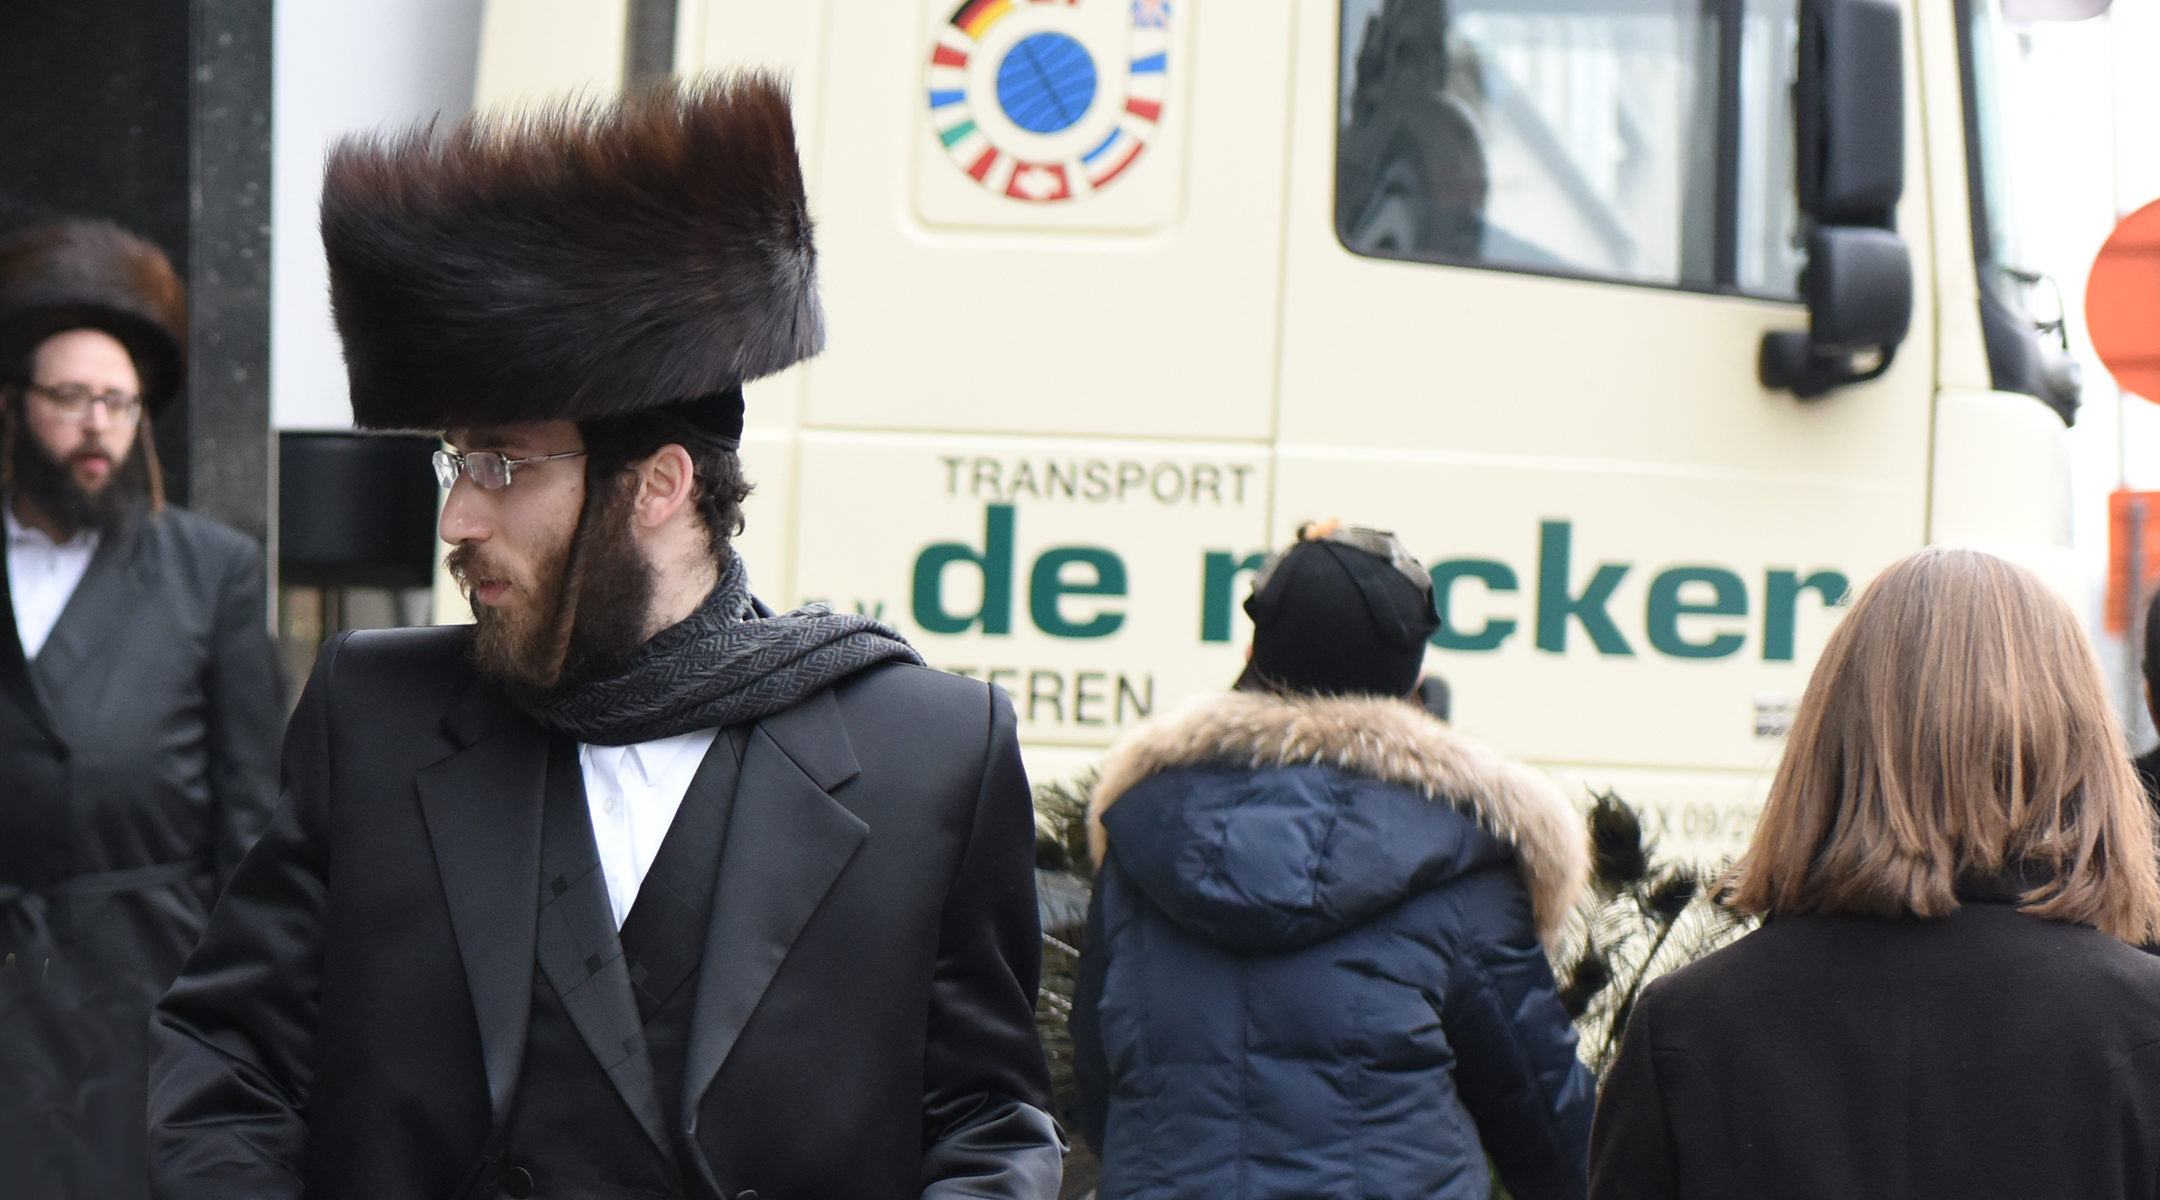 Haredi Jews walking in Antwerp, Belgium on March 16, 2016. (Cnaan Liphshiz)